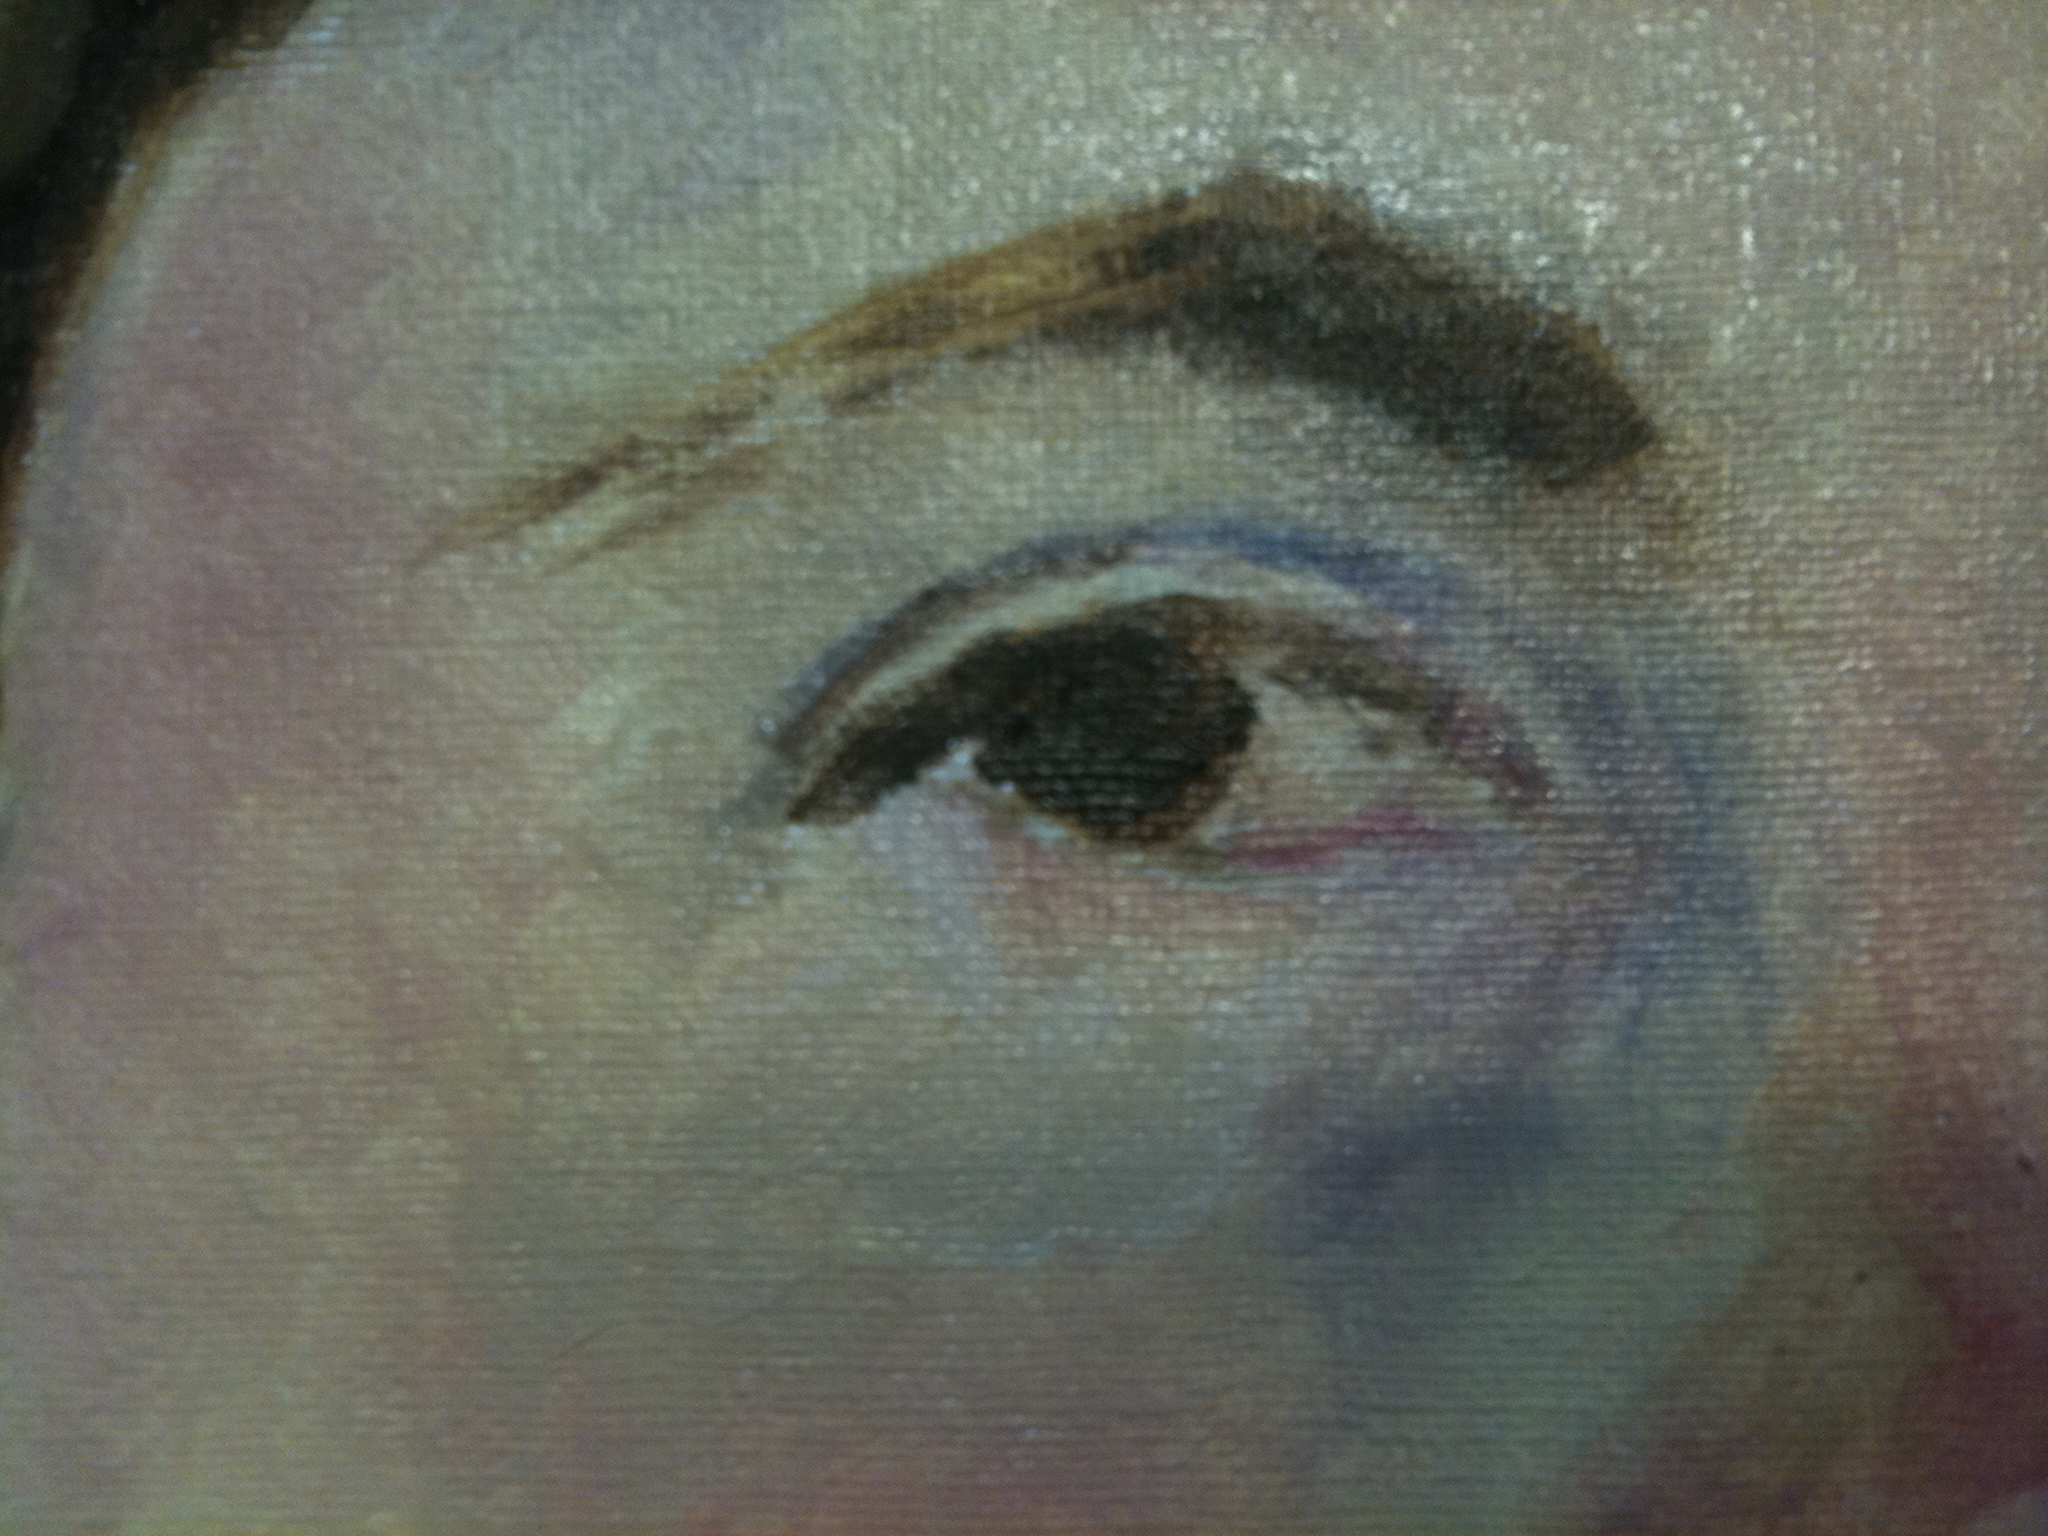 Right eye of self-portrait